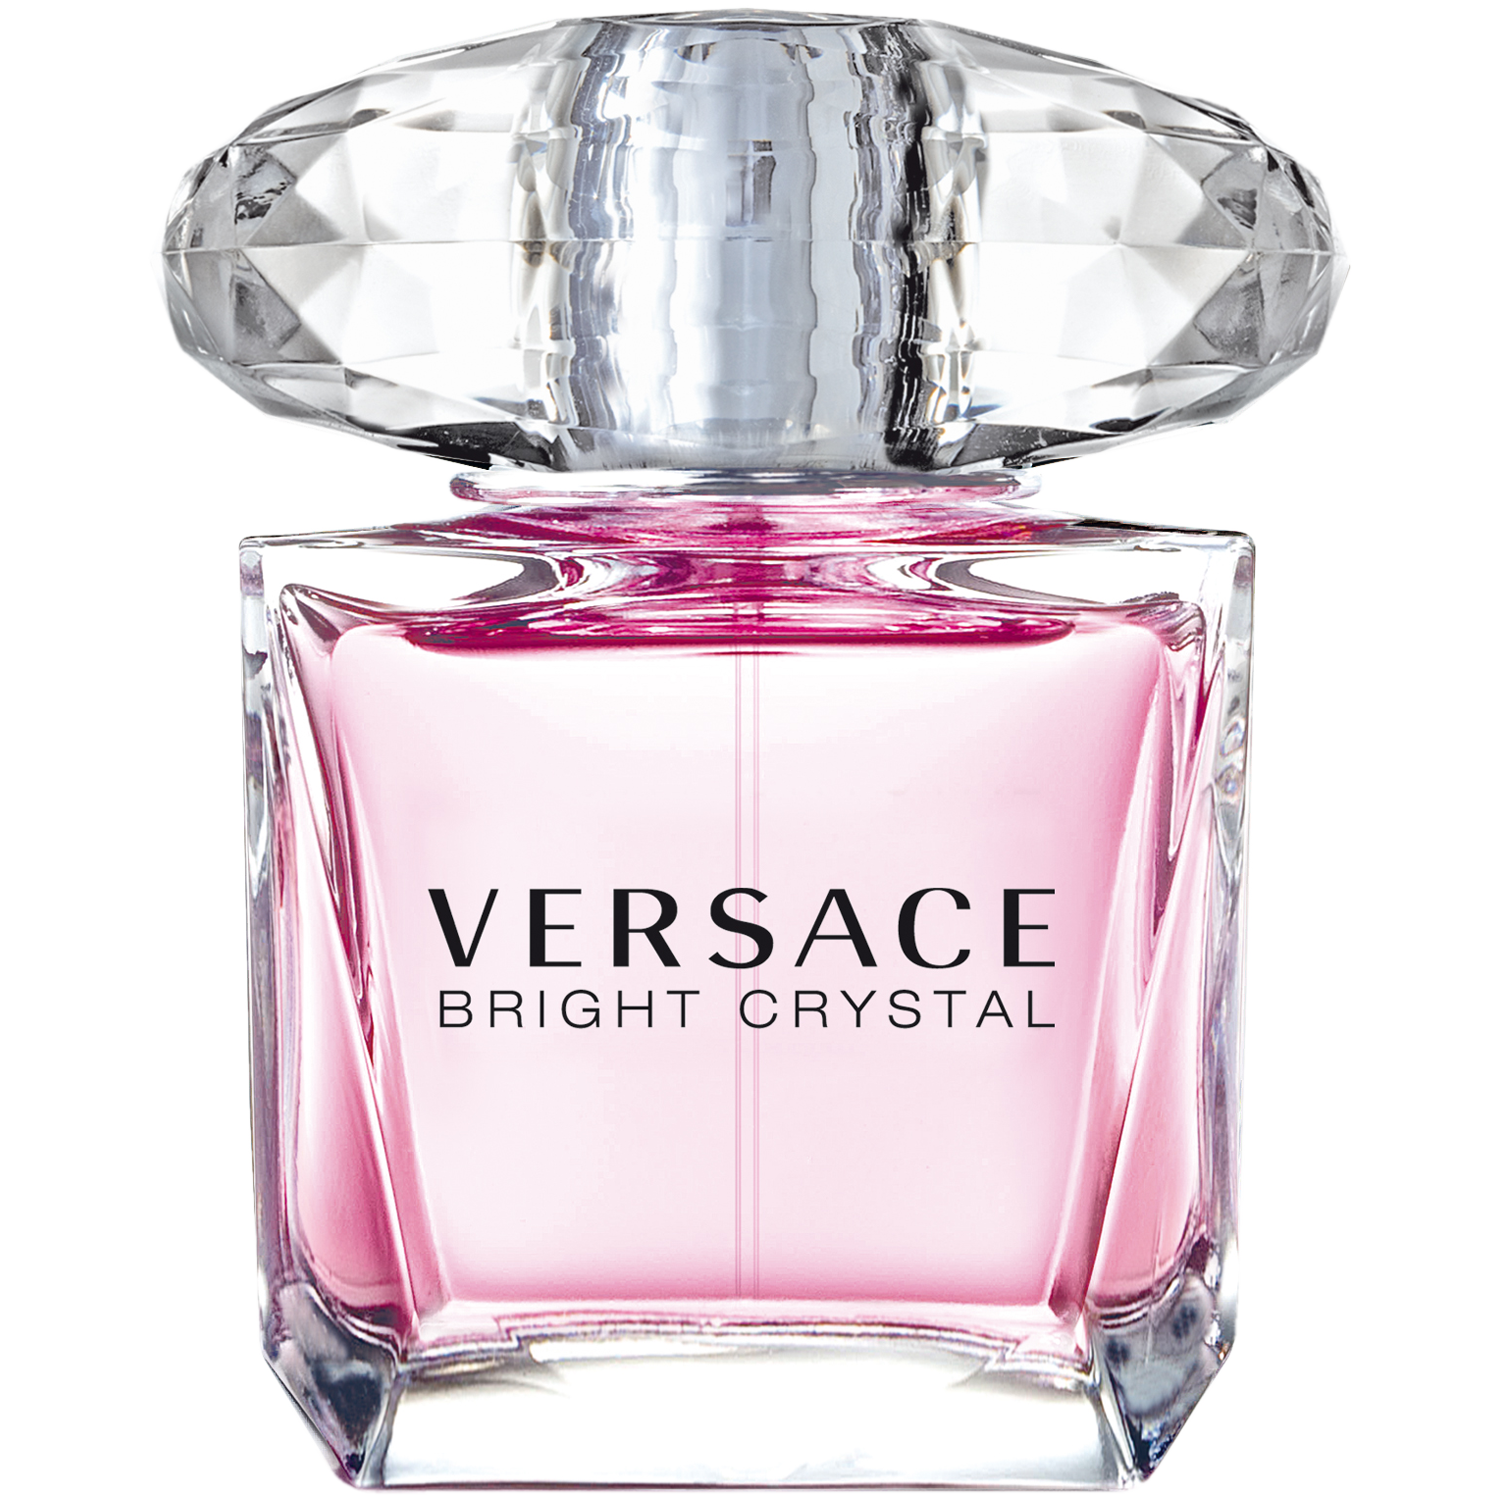 Versace woda toaletowa damska 30ml Bright Crystal | hebe.pl